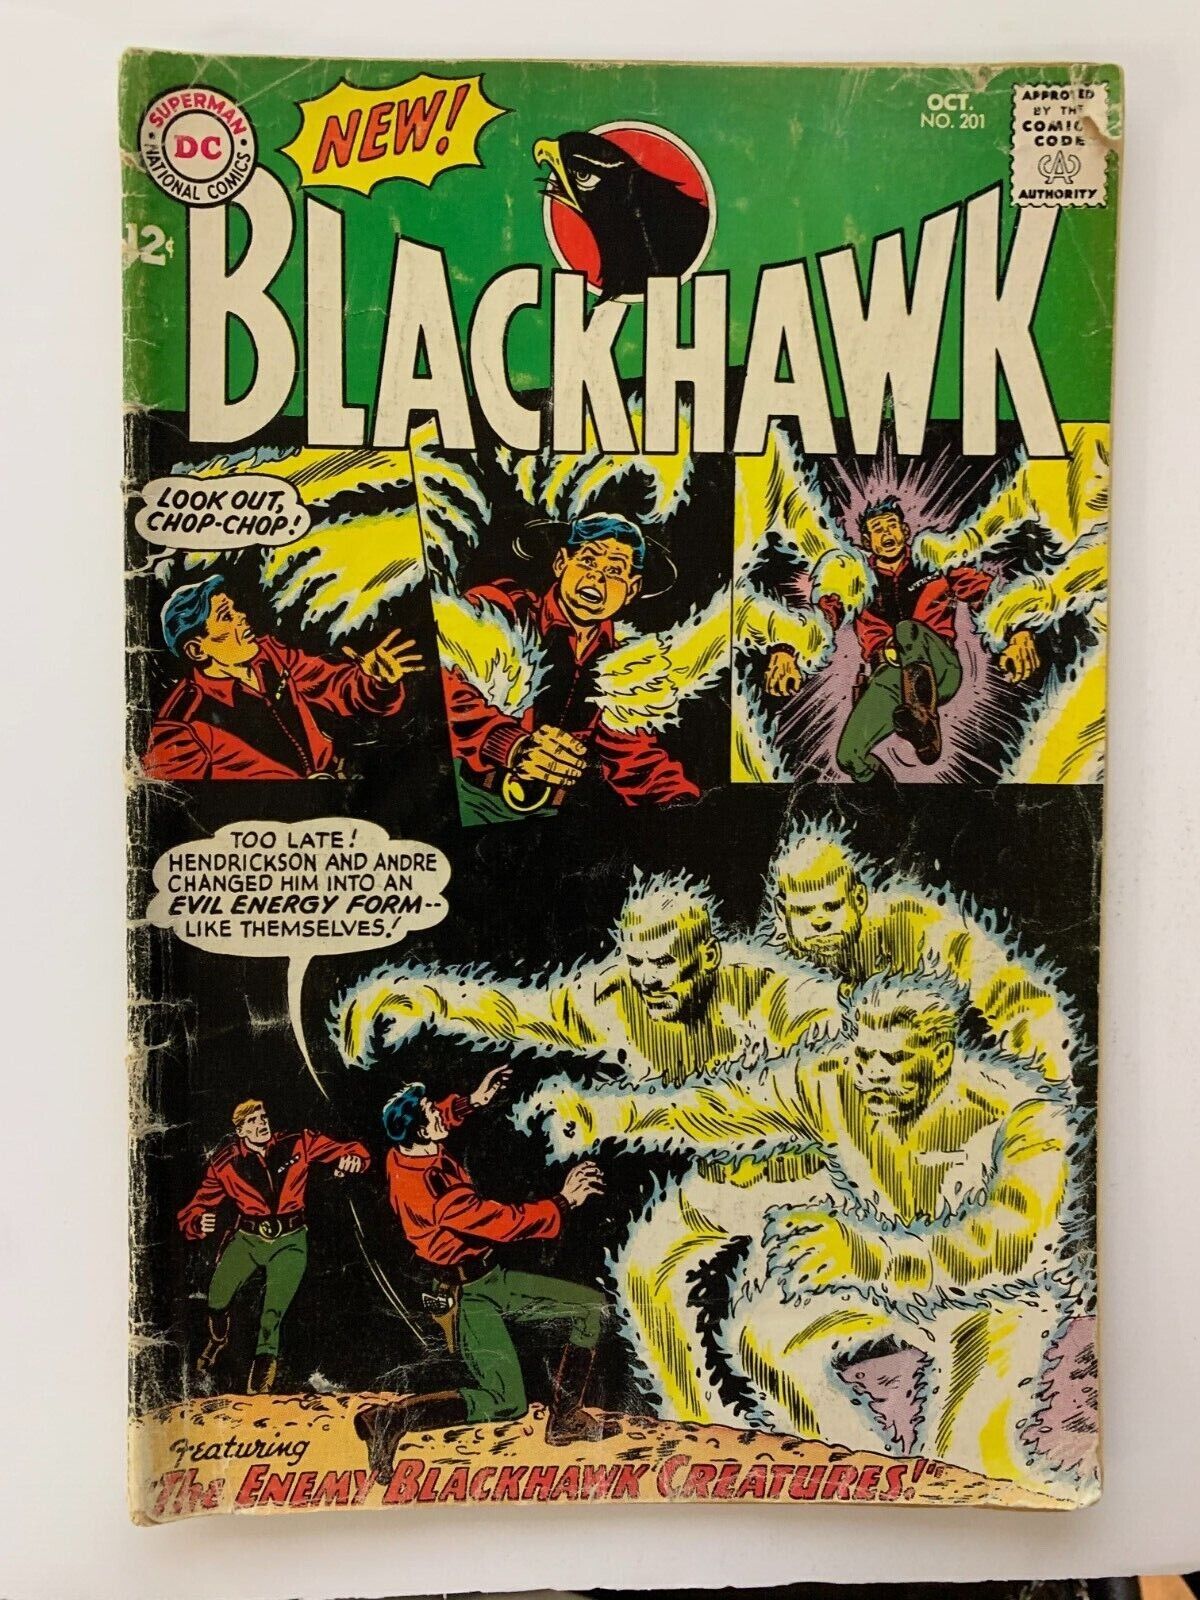 Blackhawk #201 - Oct 1964 - Vol.1         (3359)